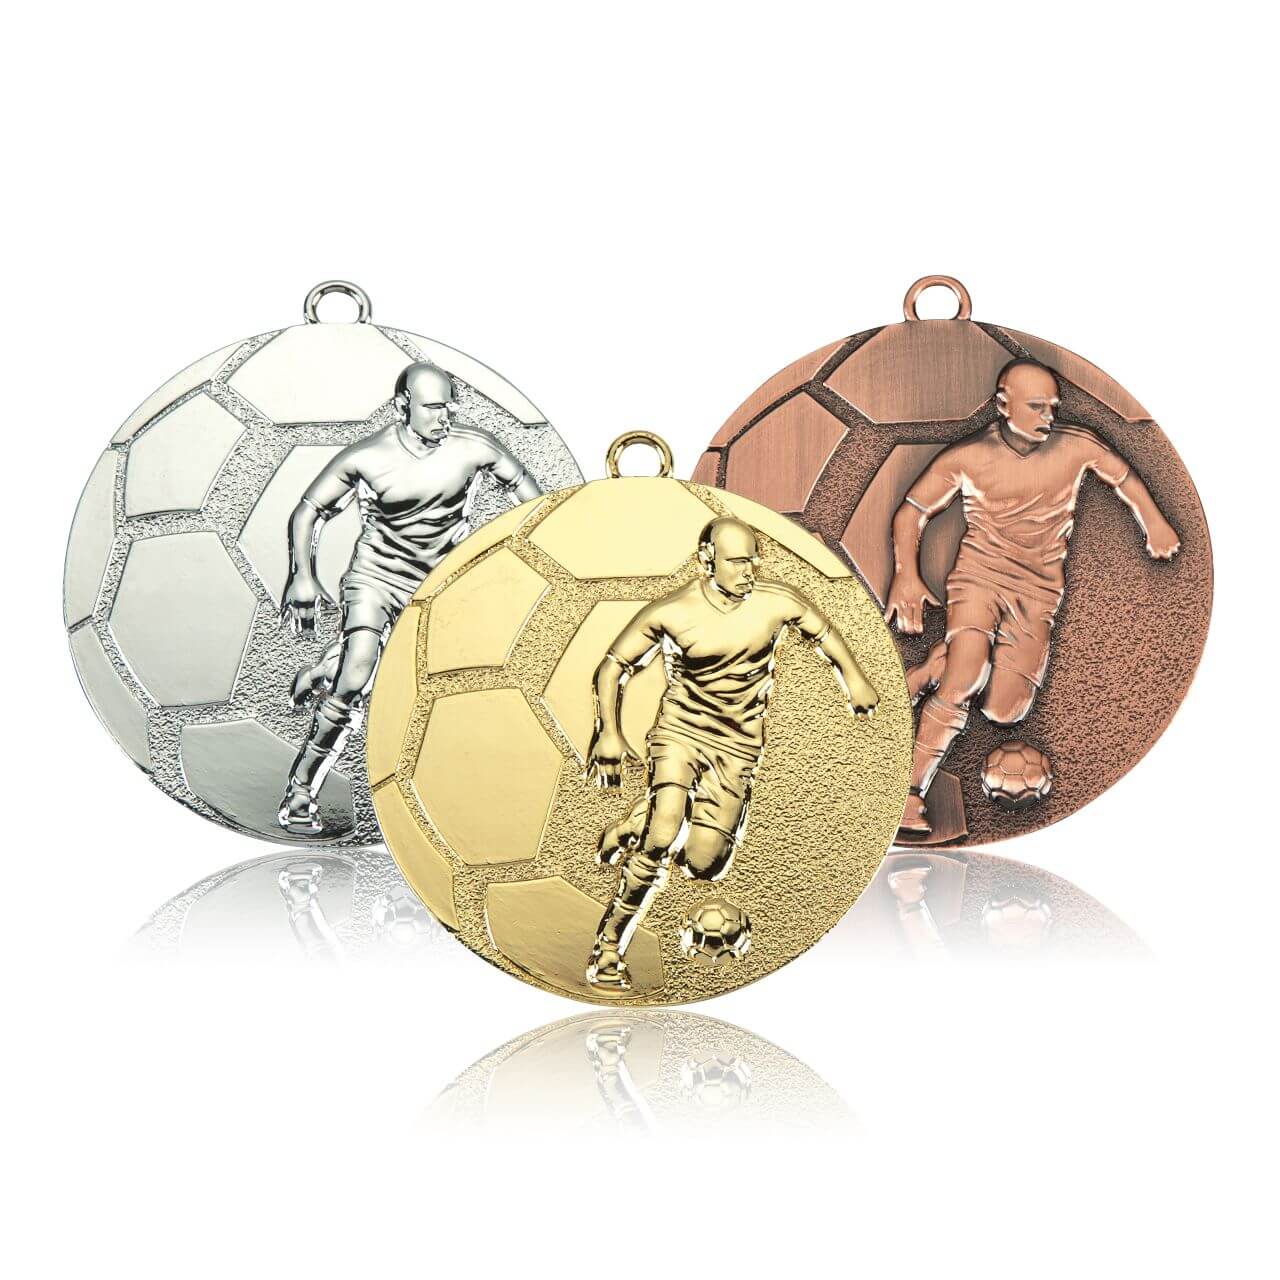 Medaille Fußball 50mm  - Farbe: Antik Bronze